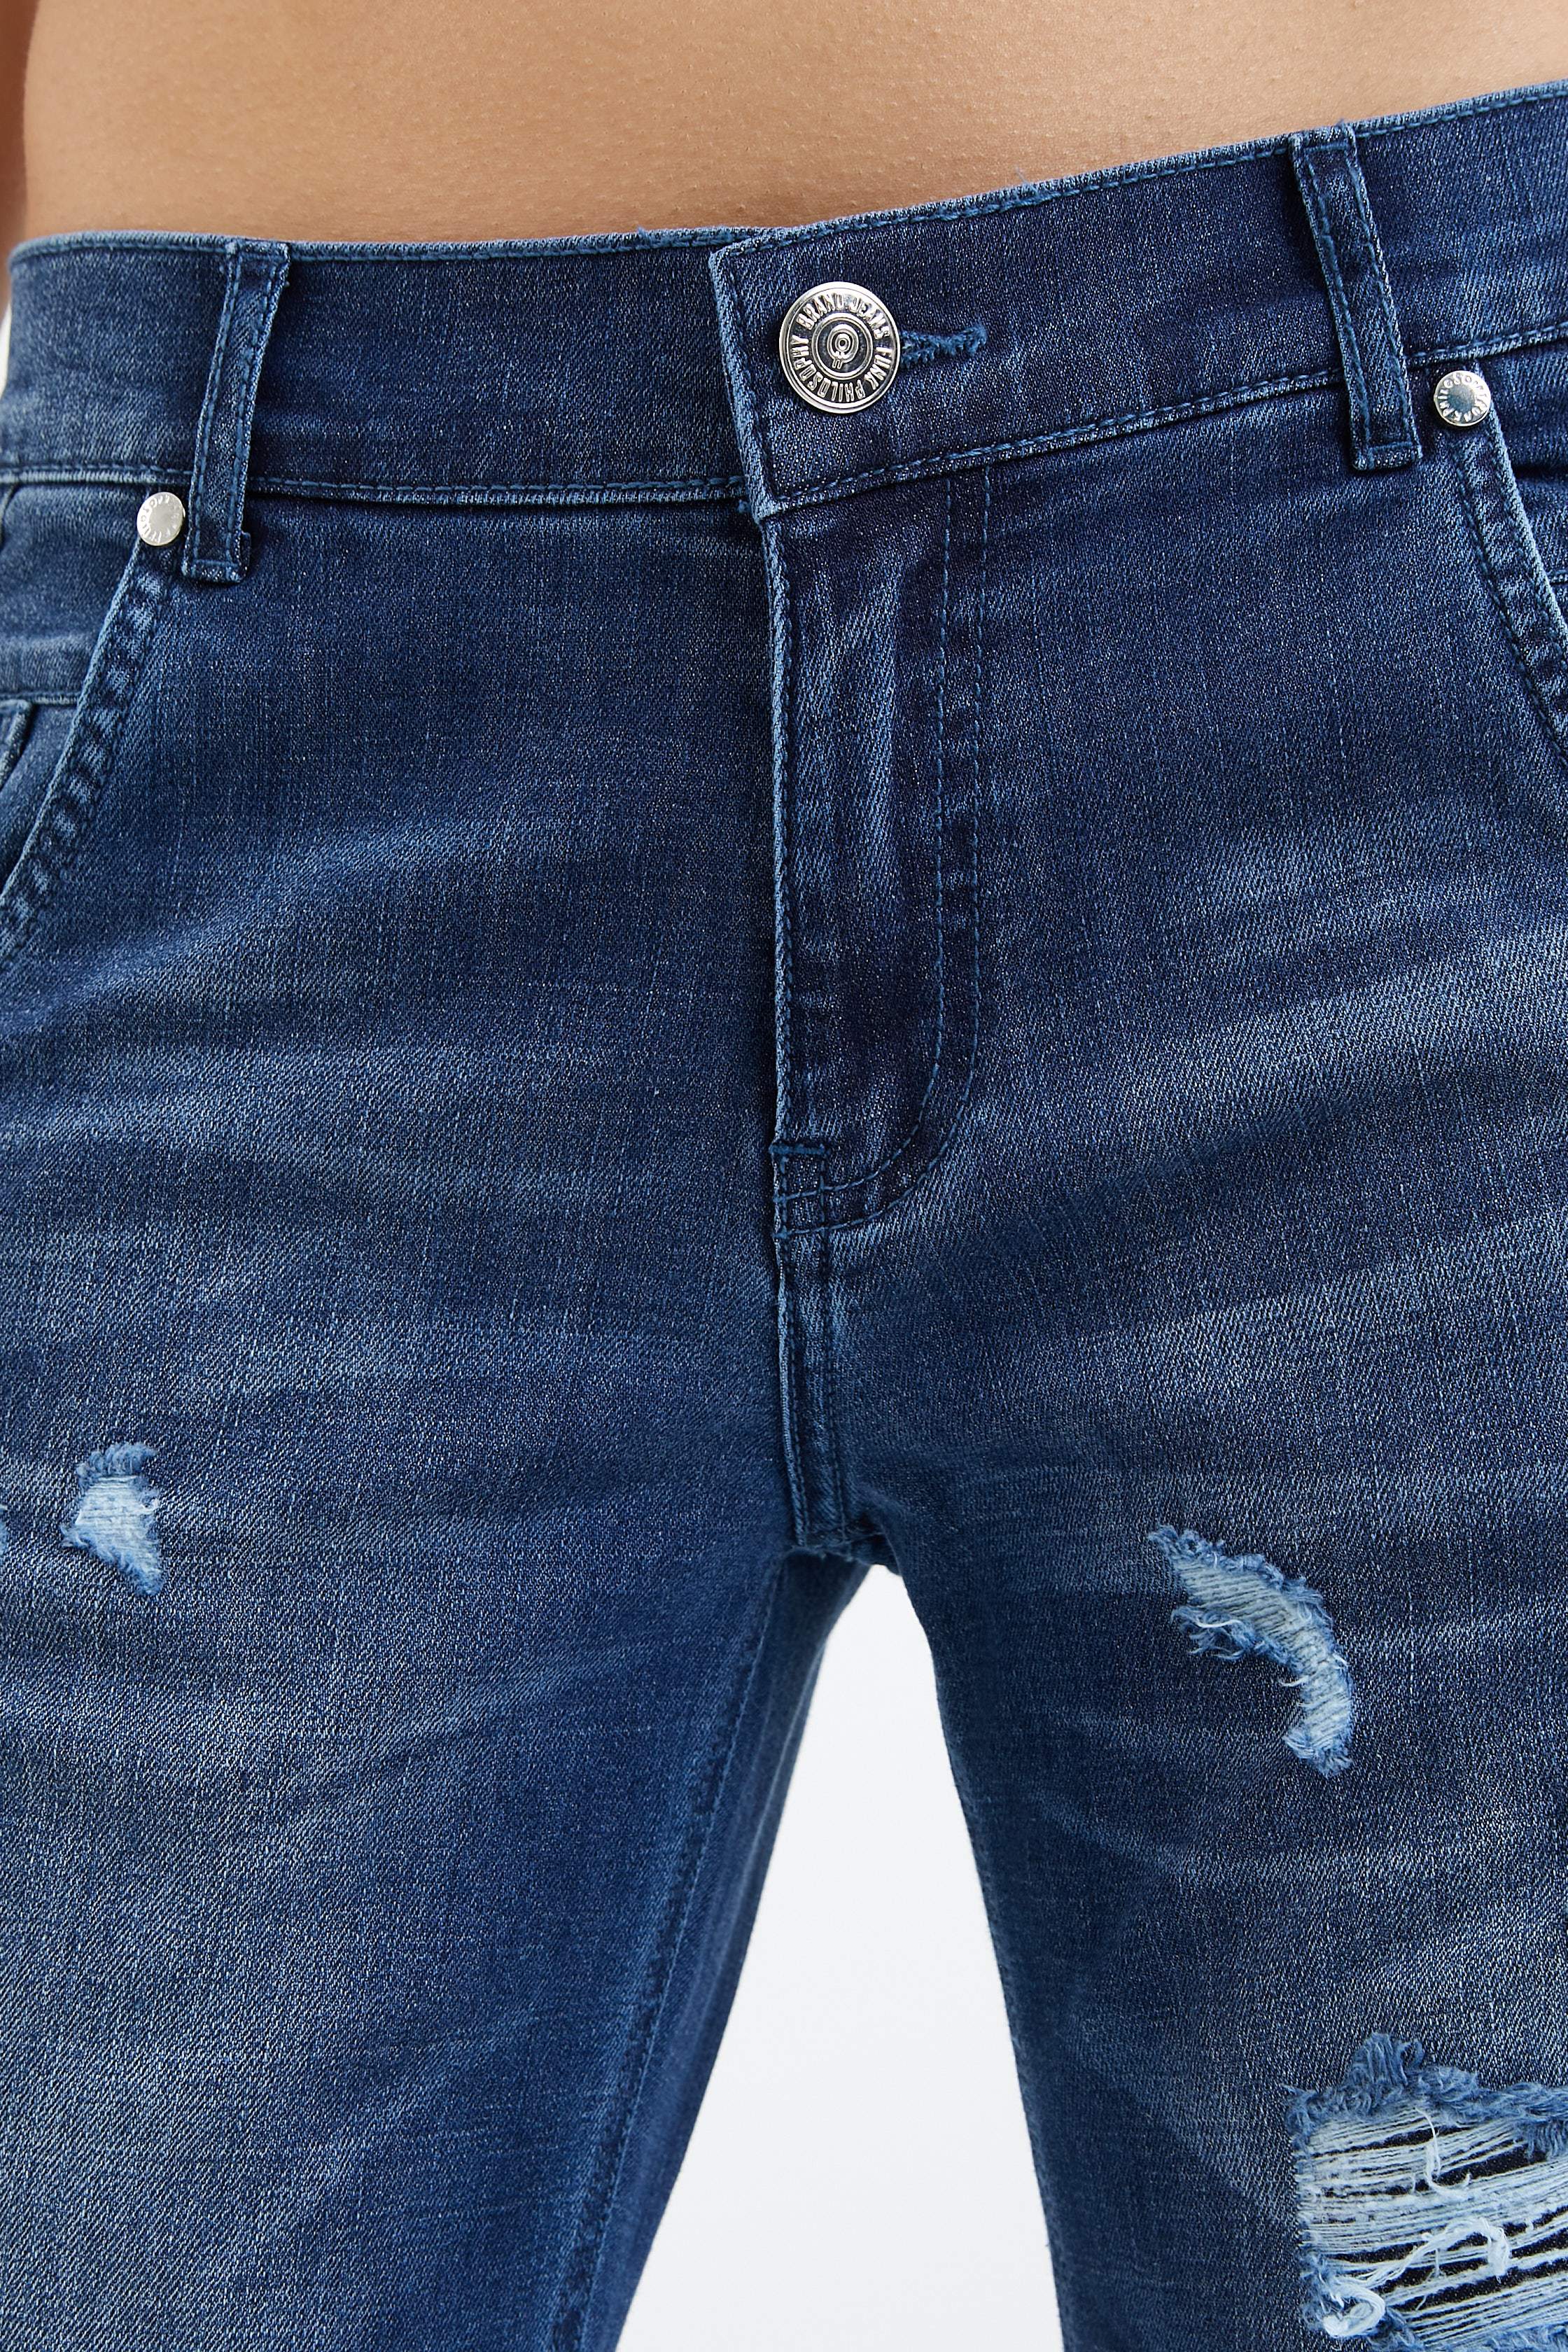 Girlfriend Cut Ripped Jeans - Blue 4029